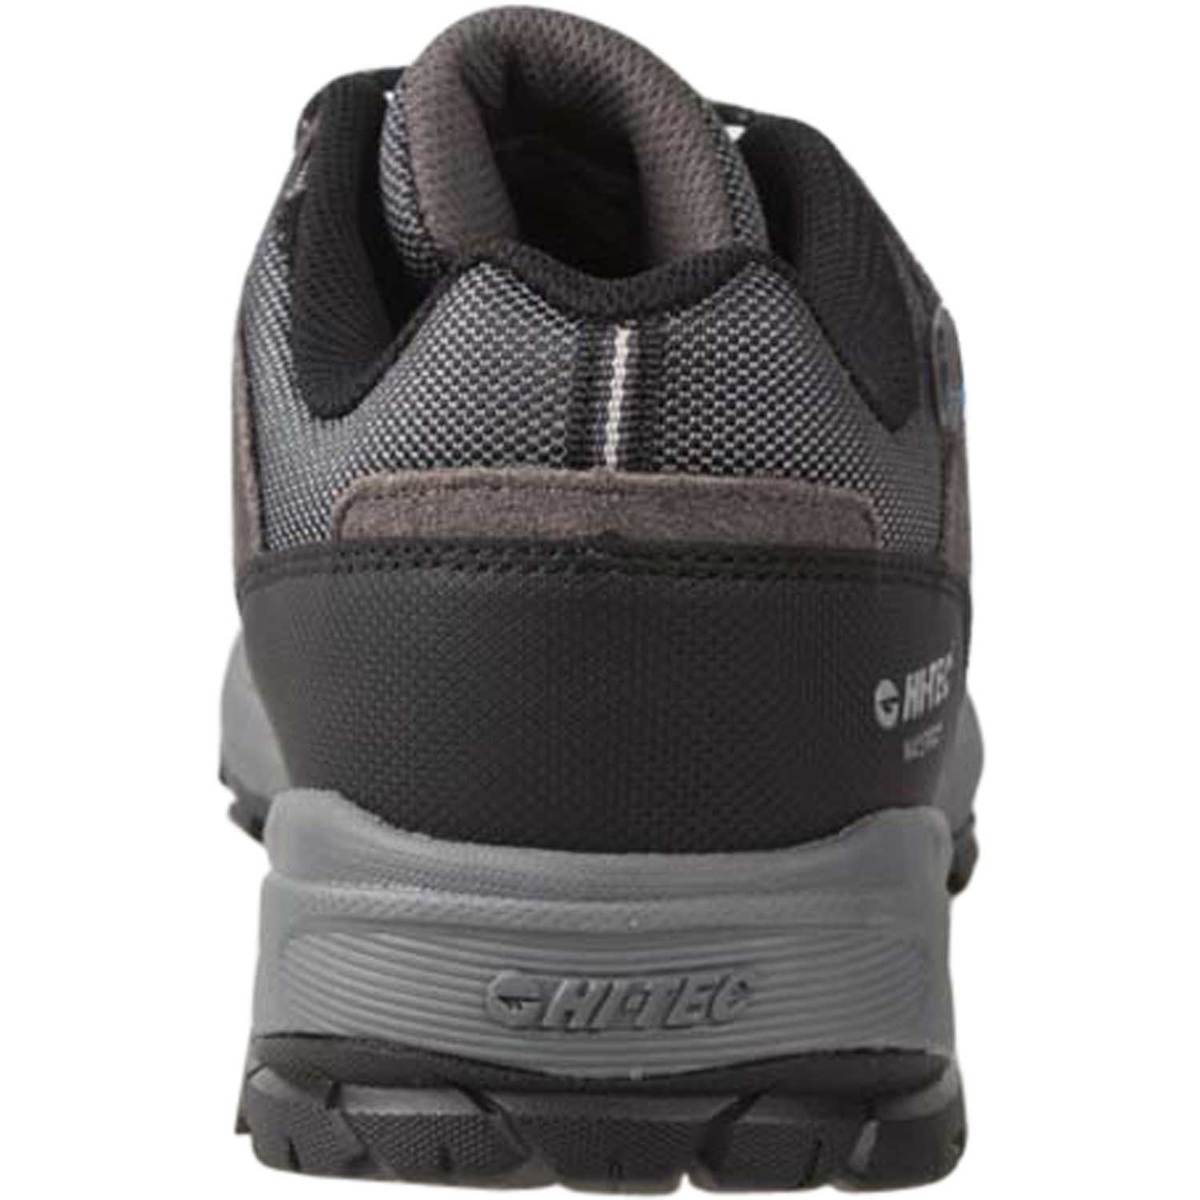 Hi-Tec Men's Wasatch Waterproof Low Hiking Shoes - Gray - Size 9.5 ...